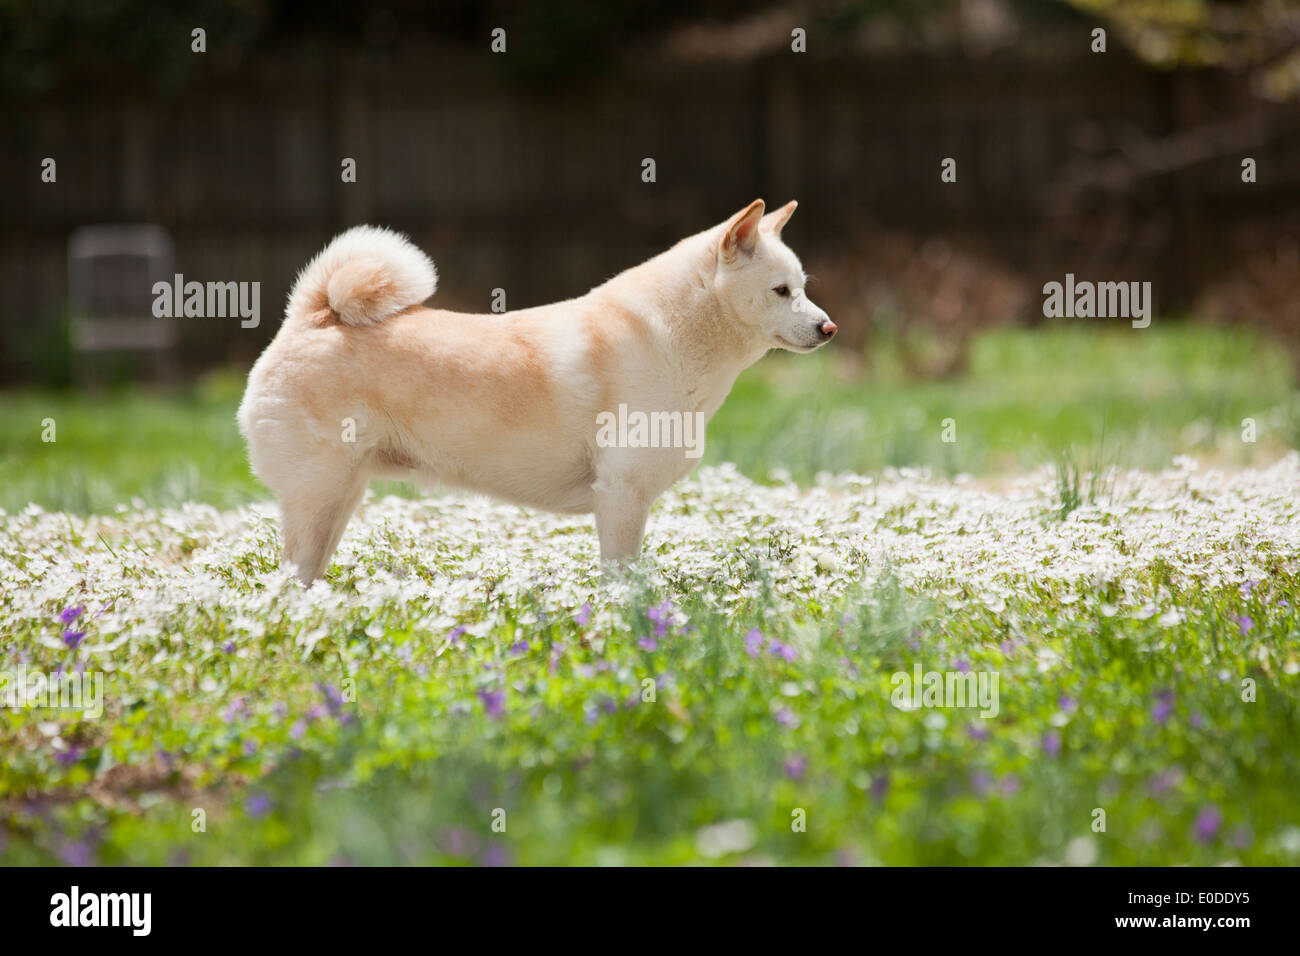 Shiba Inu standing on grass Stock Photo